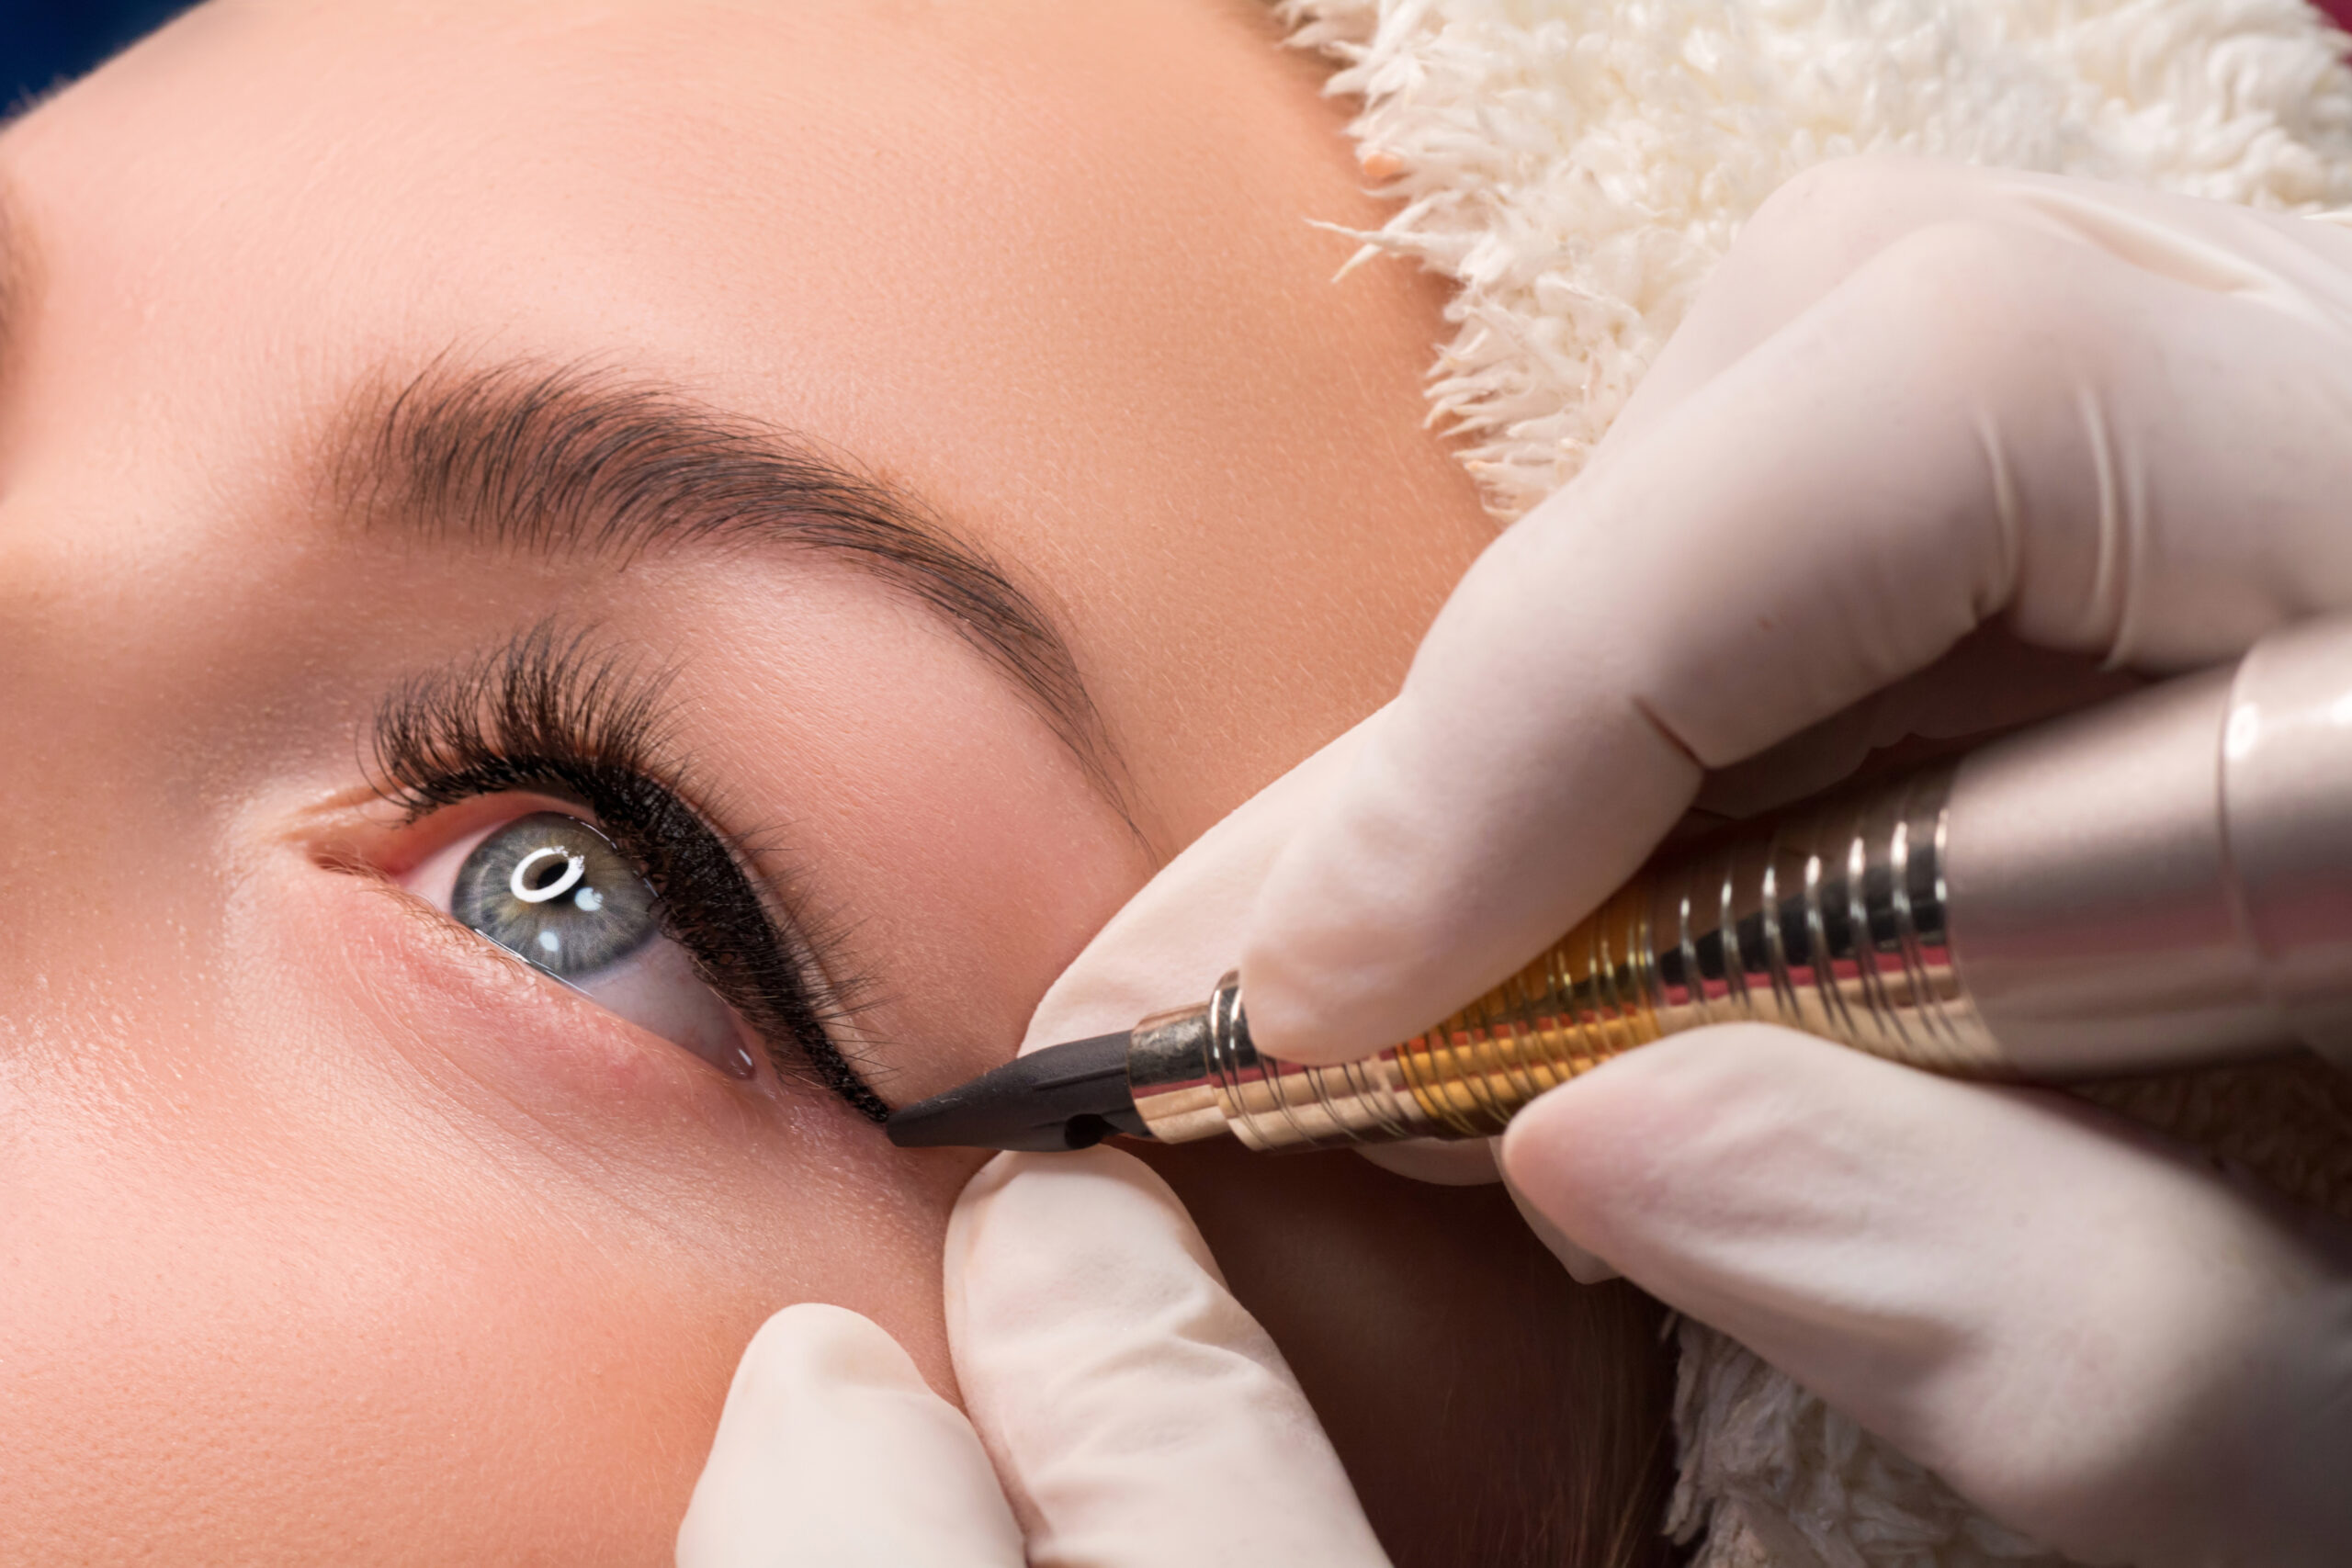 Permanent eye makeup close up shot. Cosmetologist applying tattooing of eyes. Makeup eyeliner procedure.